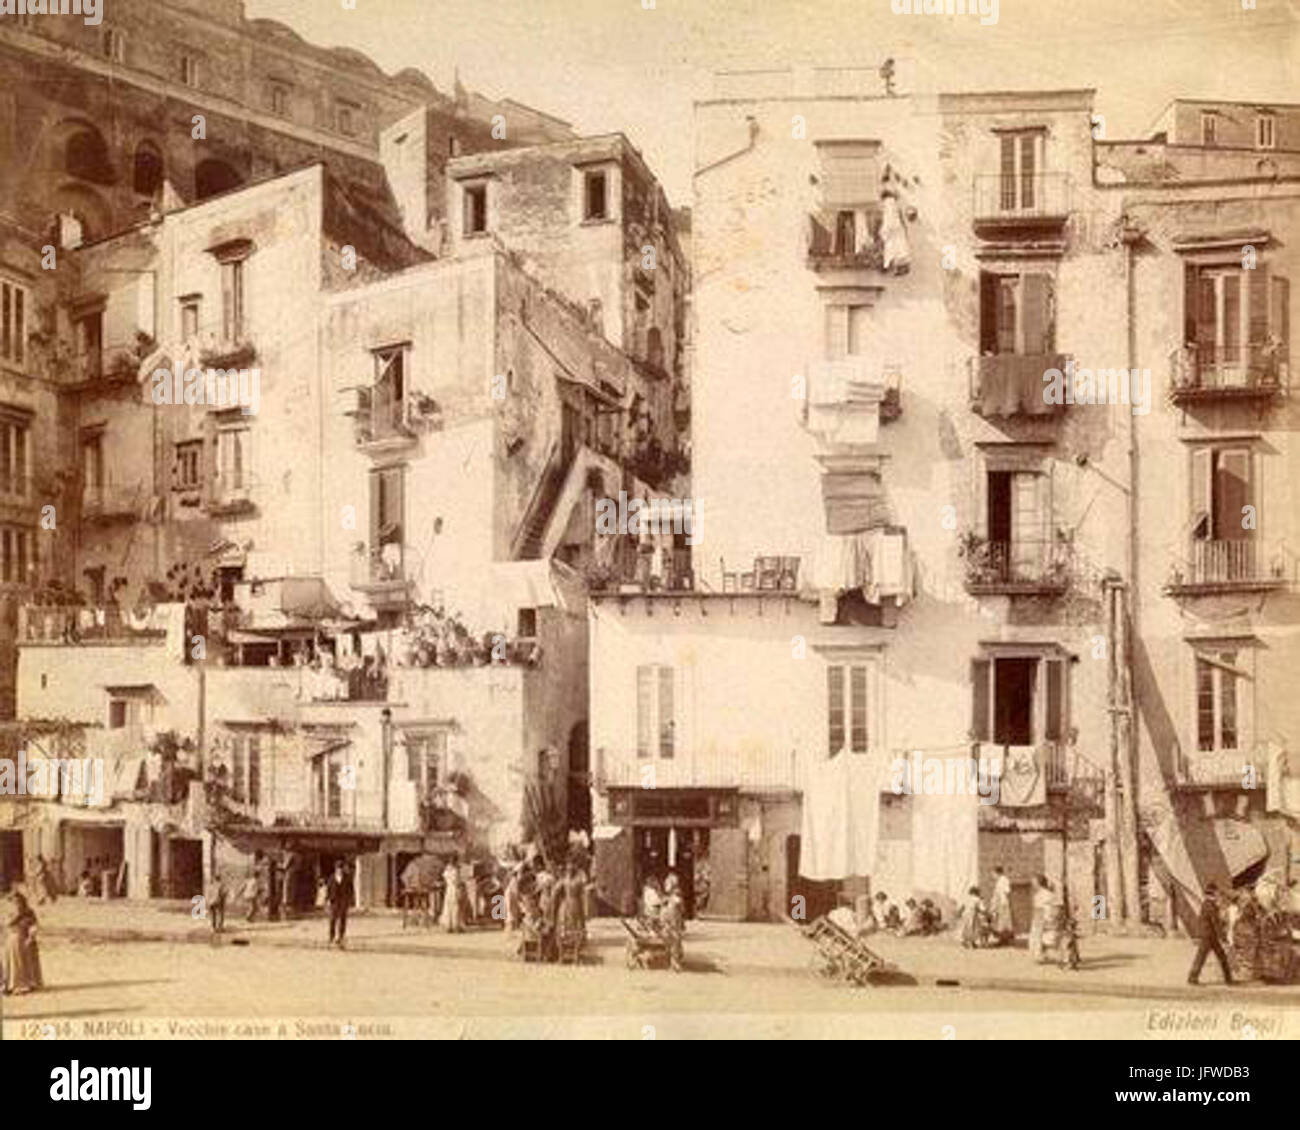 Brogi Carlo 281850-192529 - n. 12434 - Napoli Vecchie case a Santa Lucia  Stock Photo - Alamy